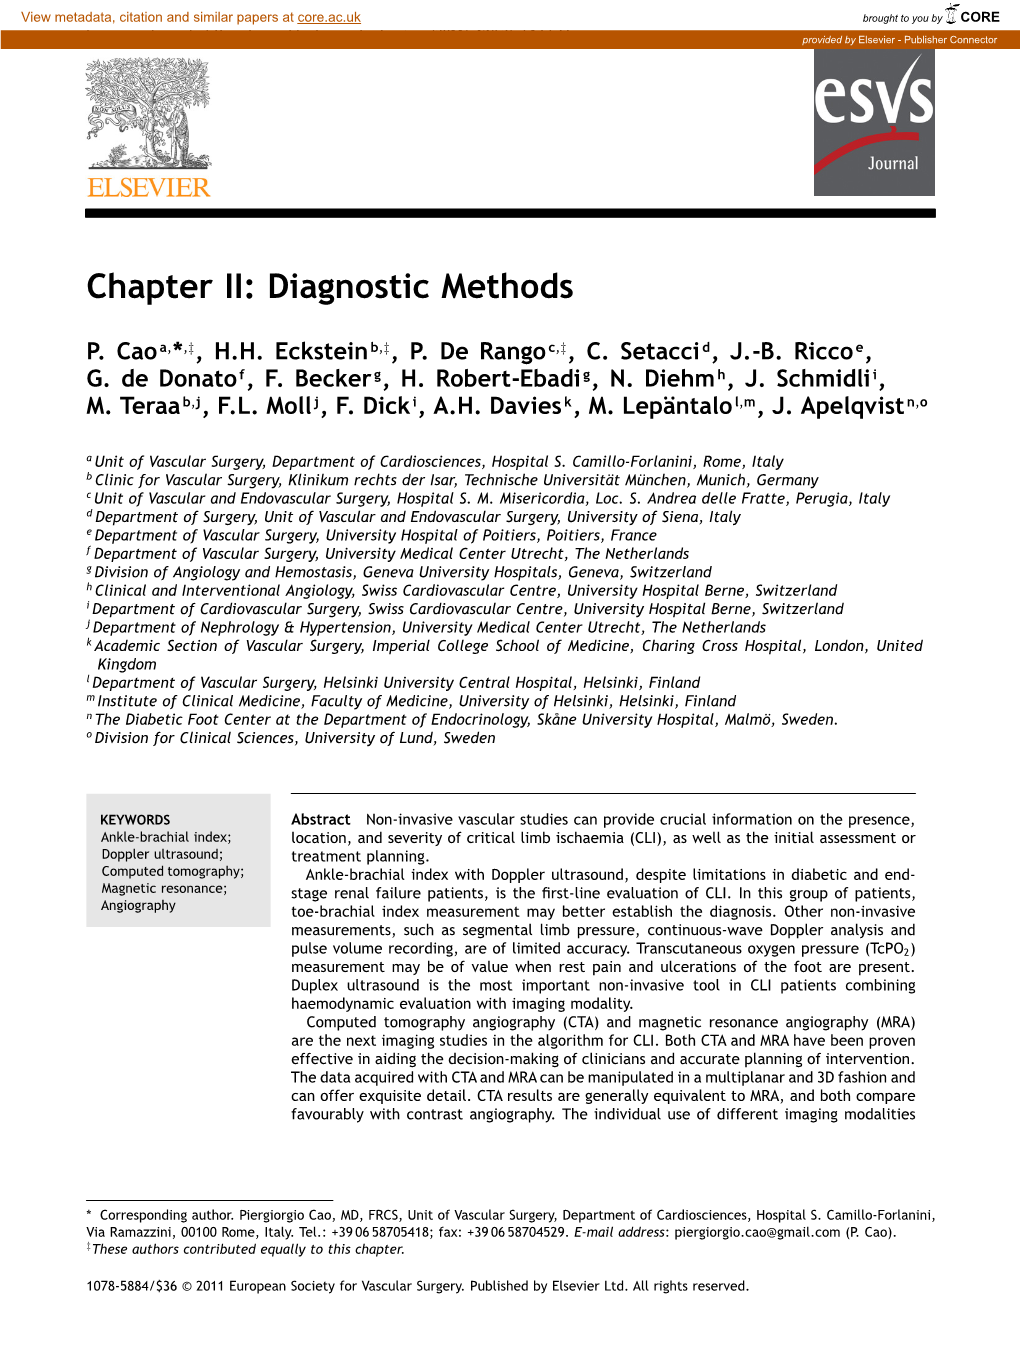 Chapter II: Diagnostic Methods